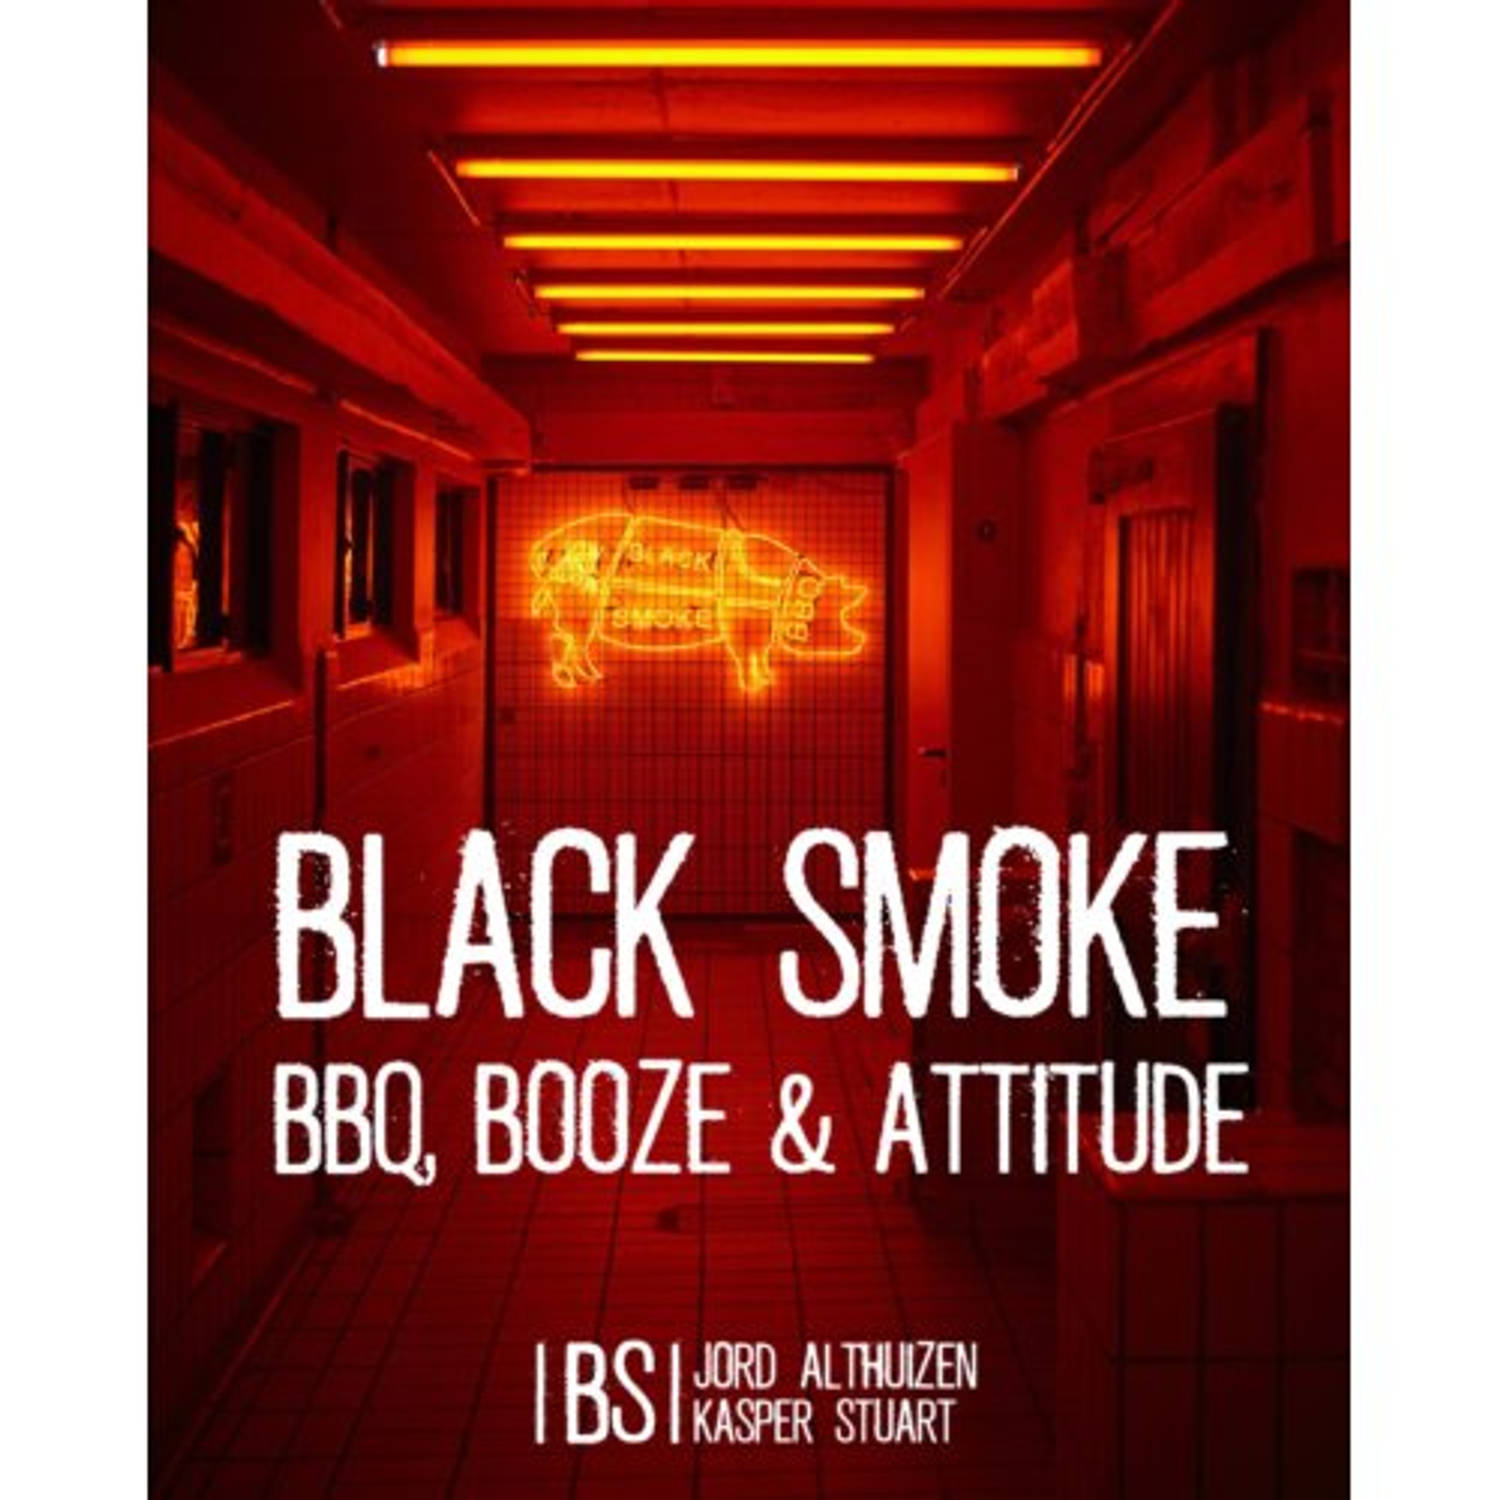 Kosmos Uitgevers Black Smoke: BBQ, Booze en Attitude